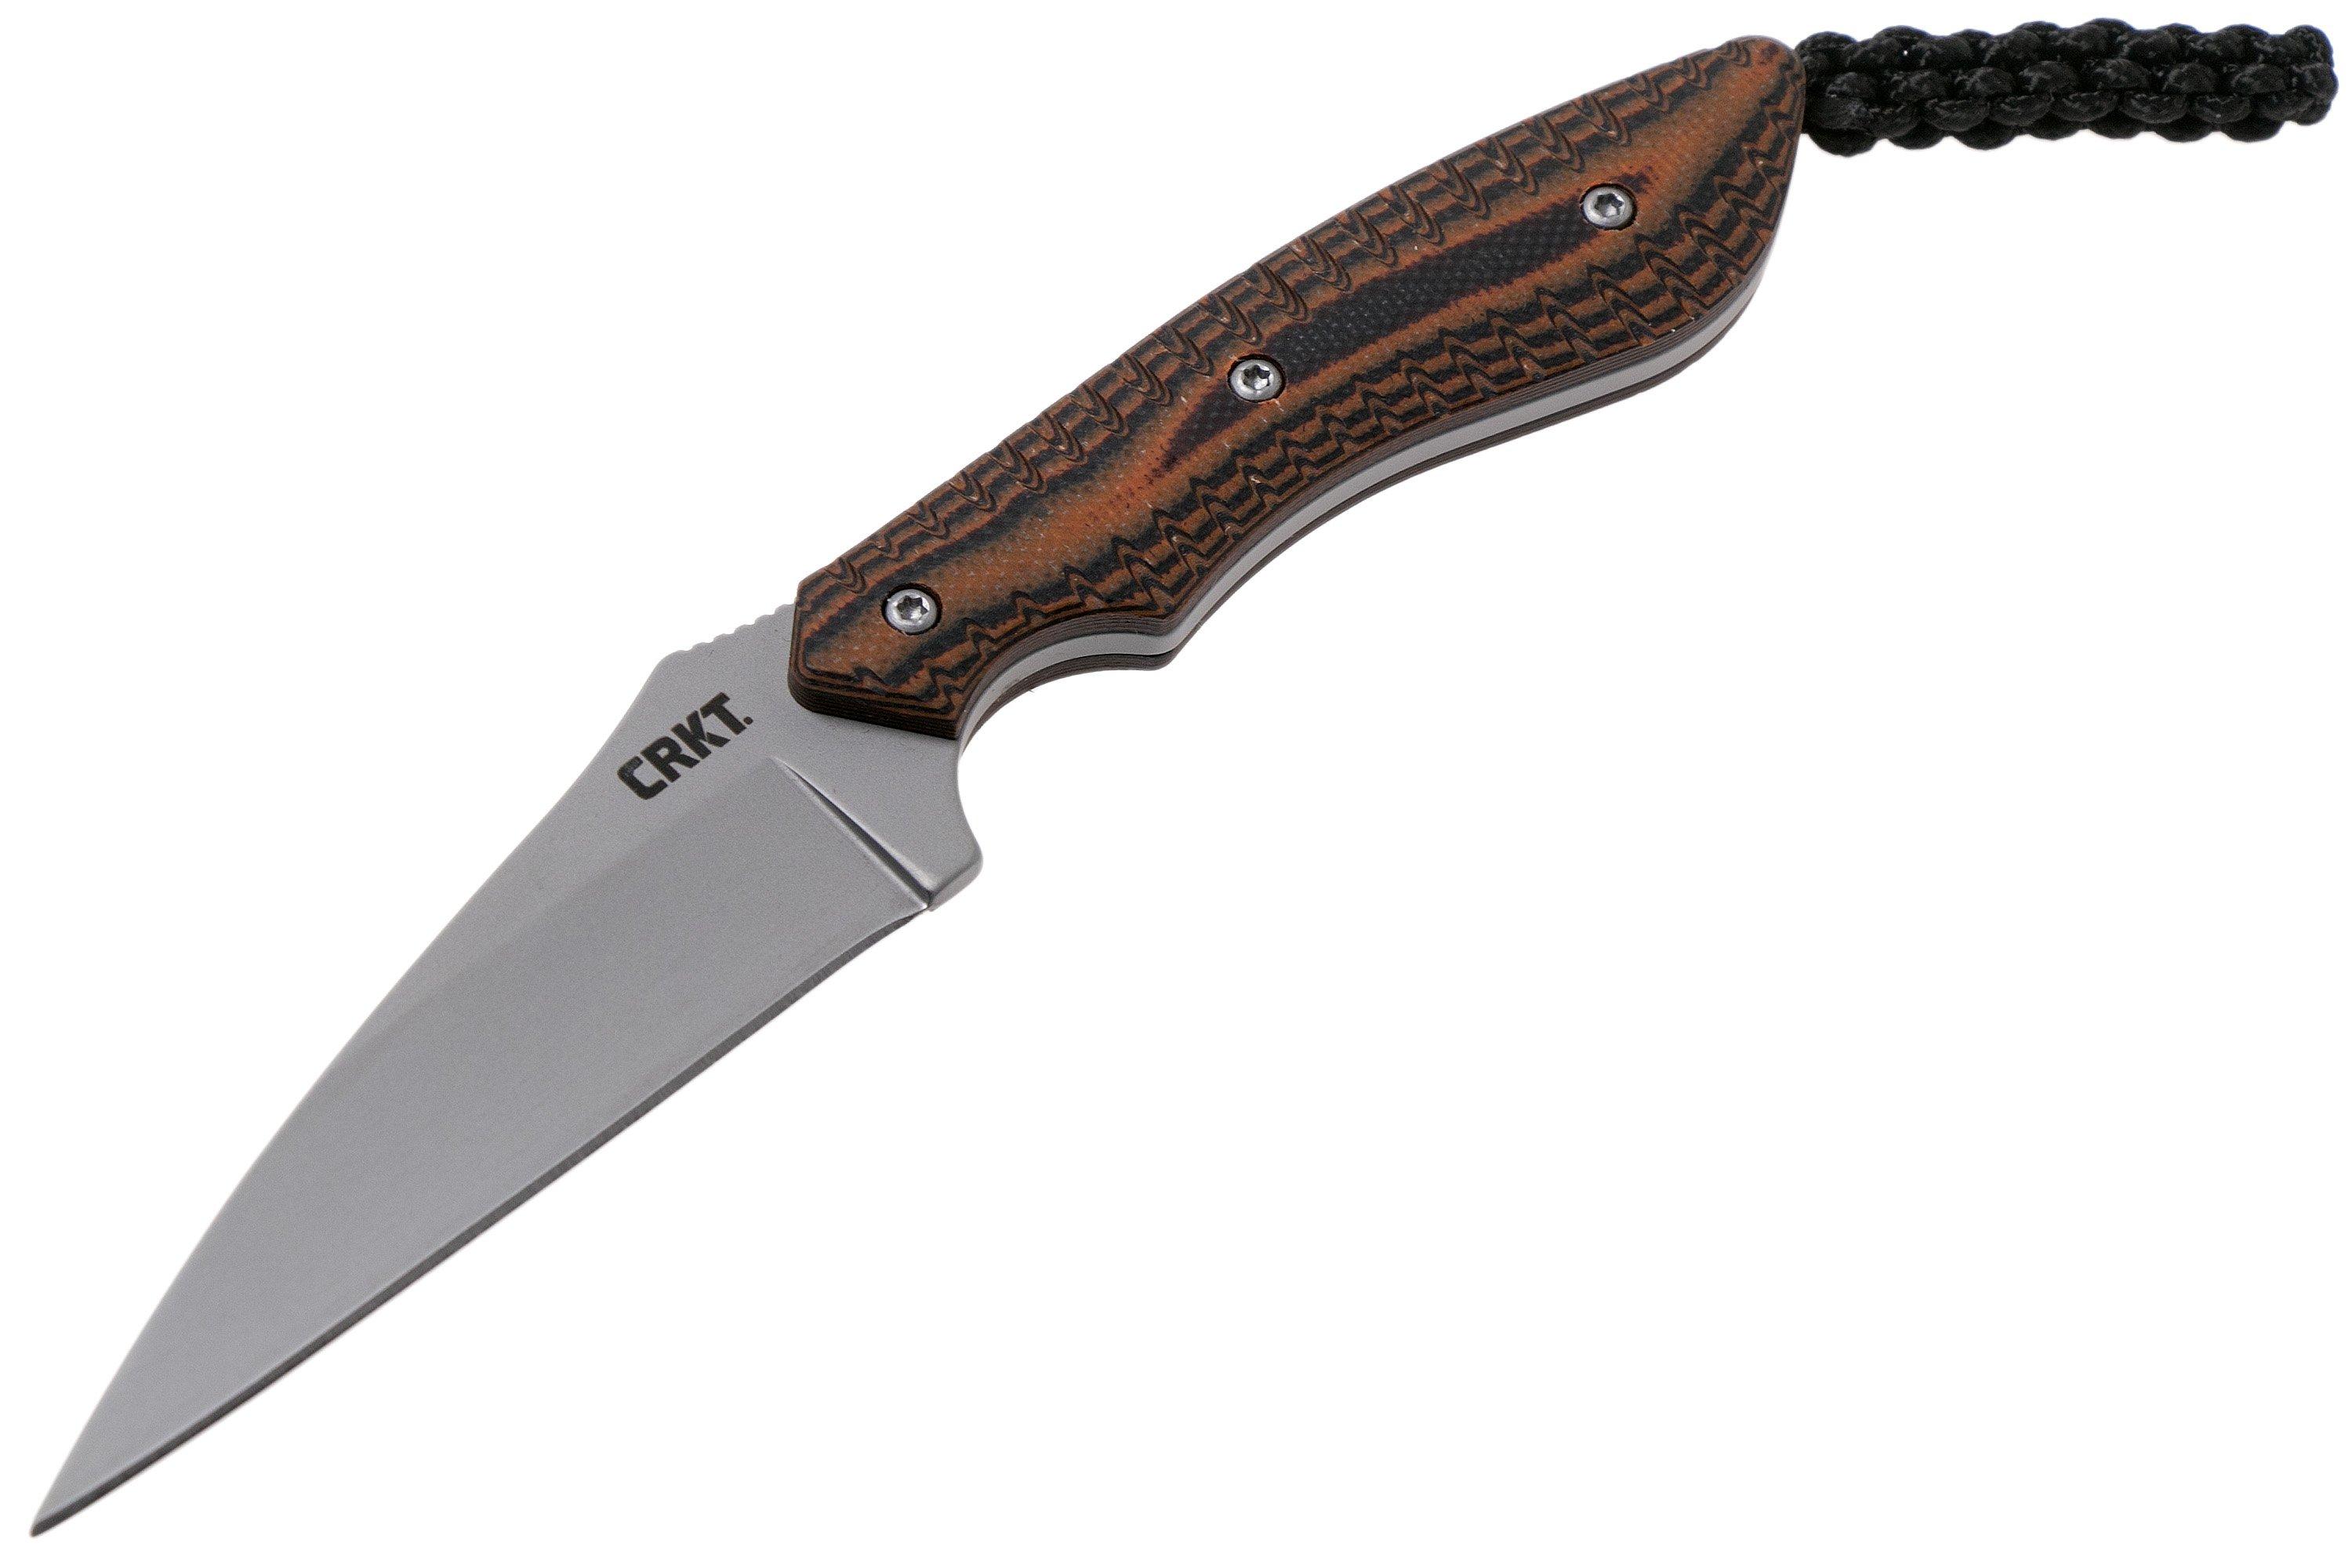 CRKT SPEW 2388 neck knife, Alan Folts design  Advantageously shopping at